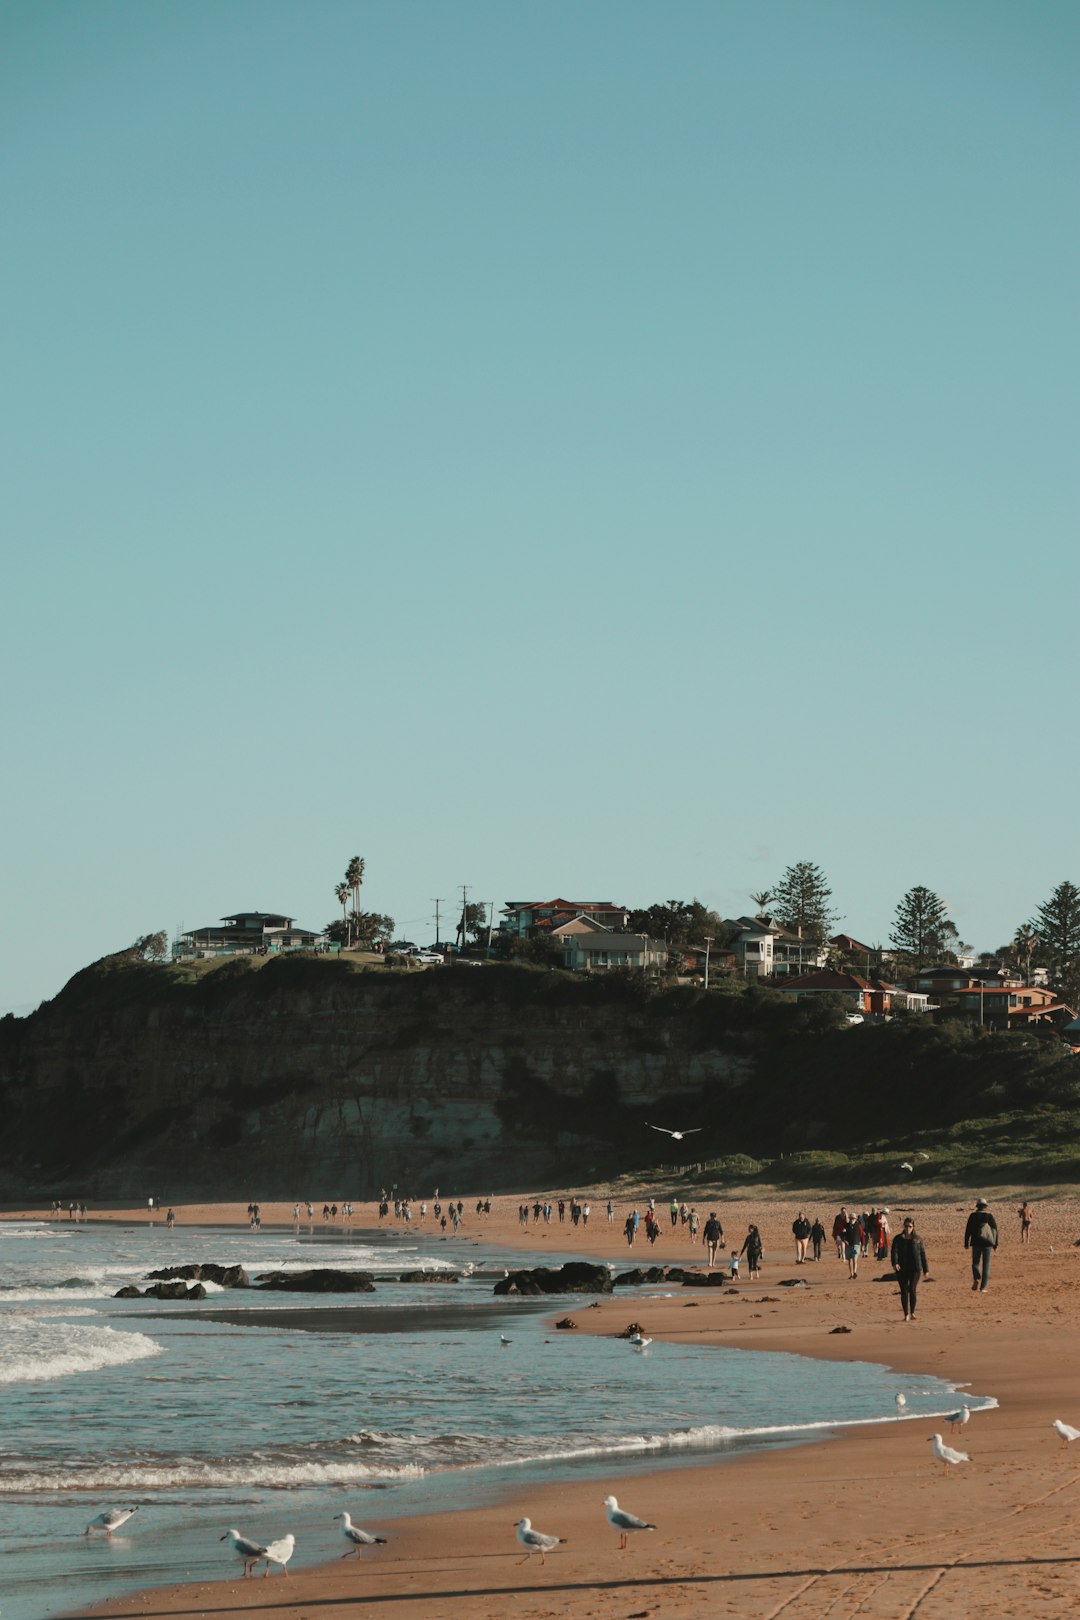 travelers stories about Beach in Mona Vale Beach, Australia